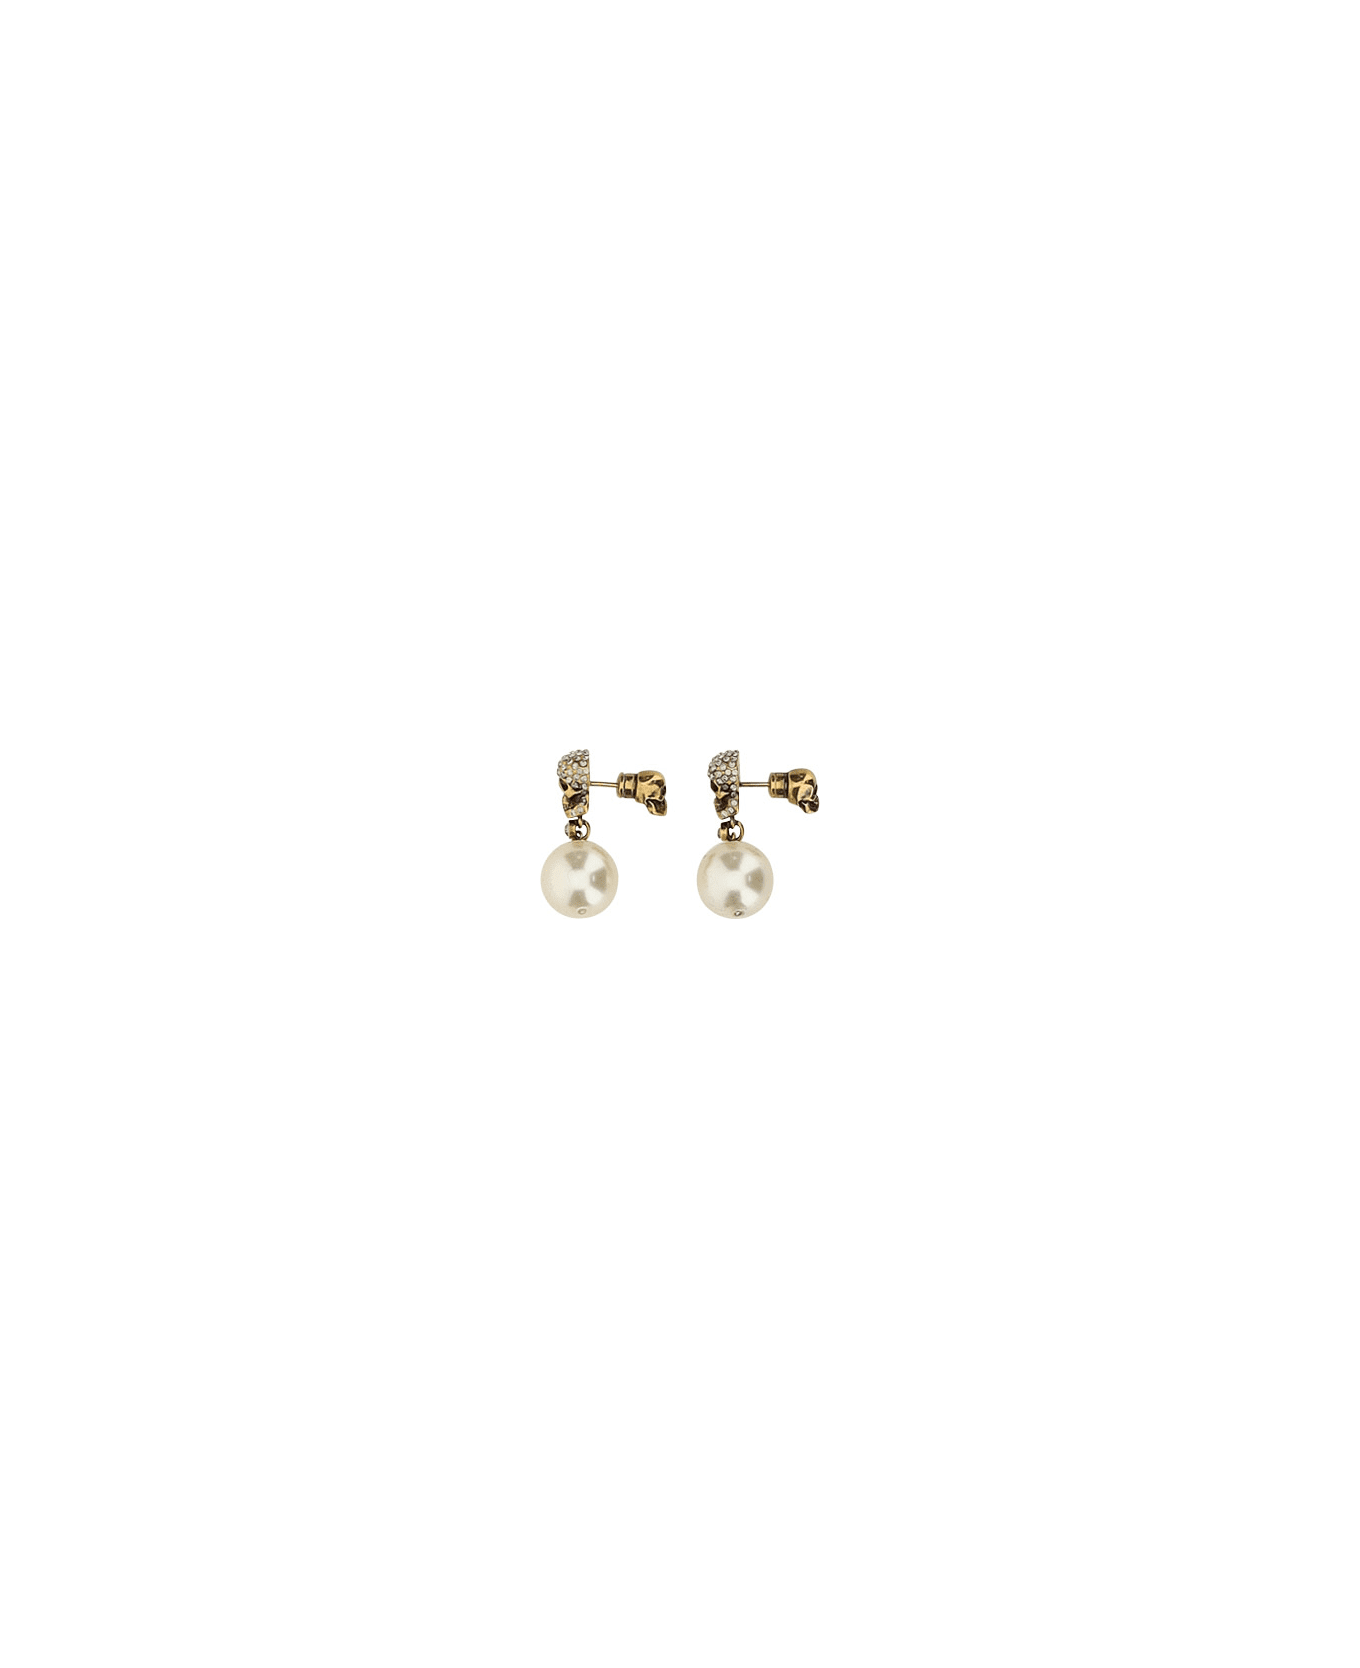 Alexander McQueen Pearl Earrings - Antique gold